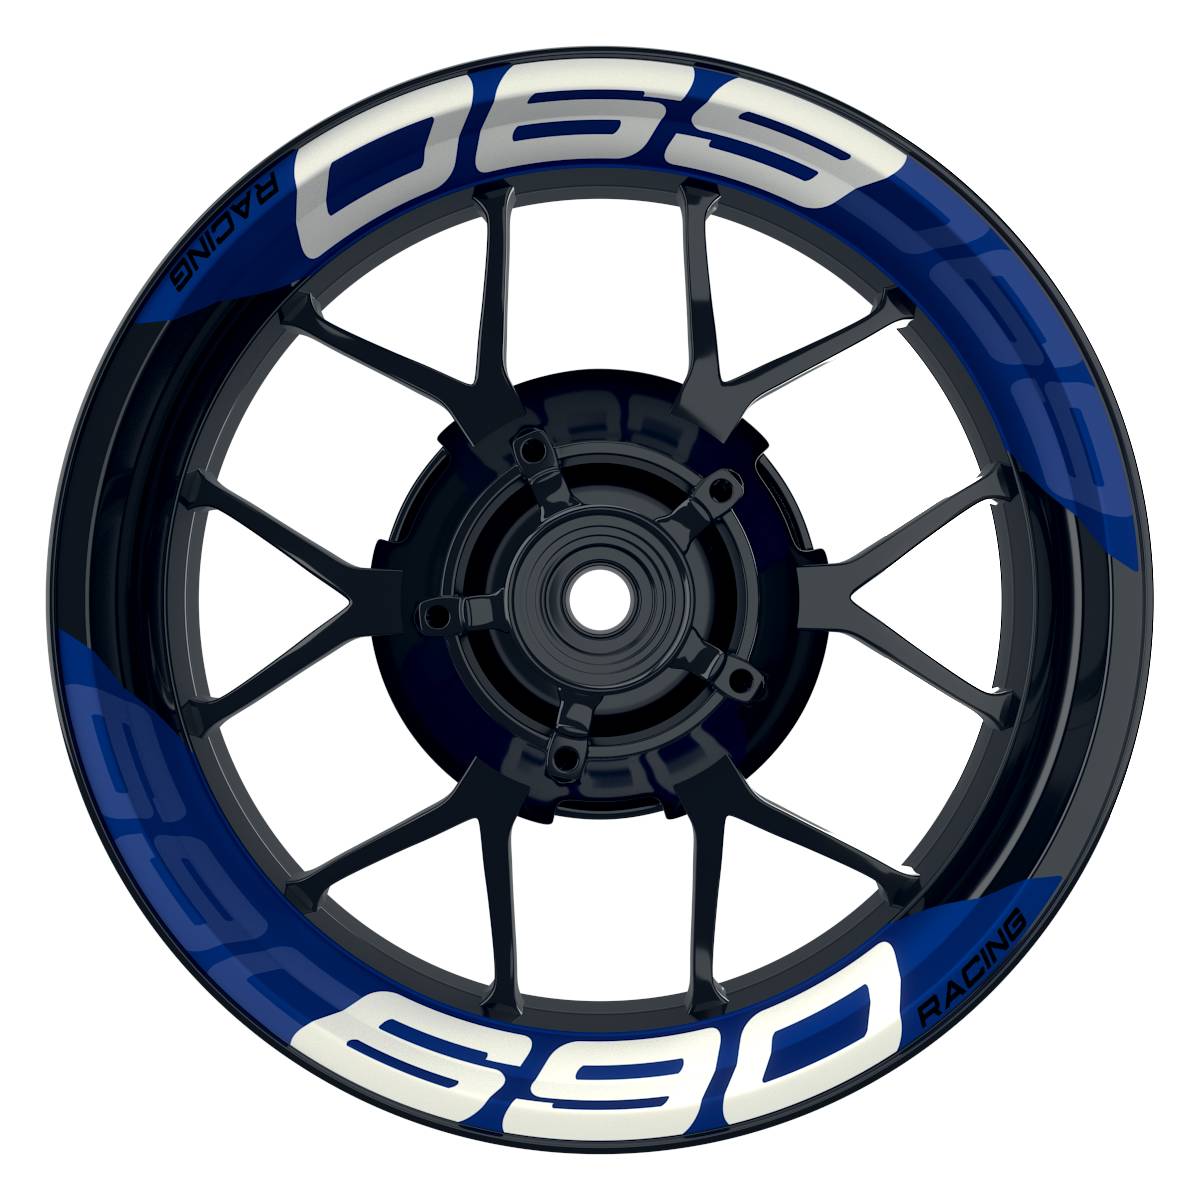 Wheelsticker Felgenaufkleber KTM Racing 690 einfarbig V2 blau Frontansicht